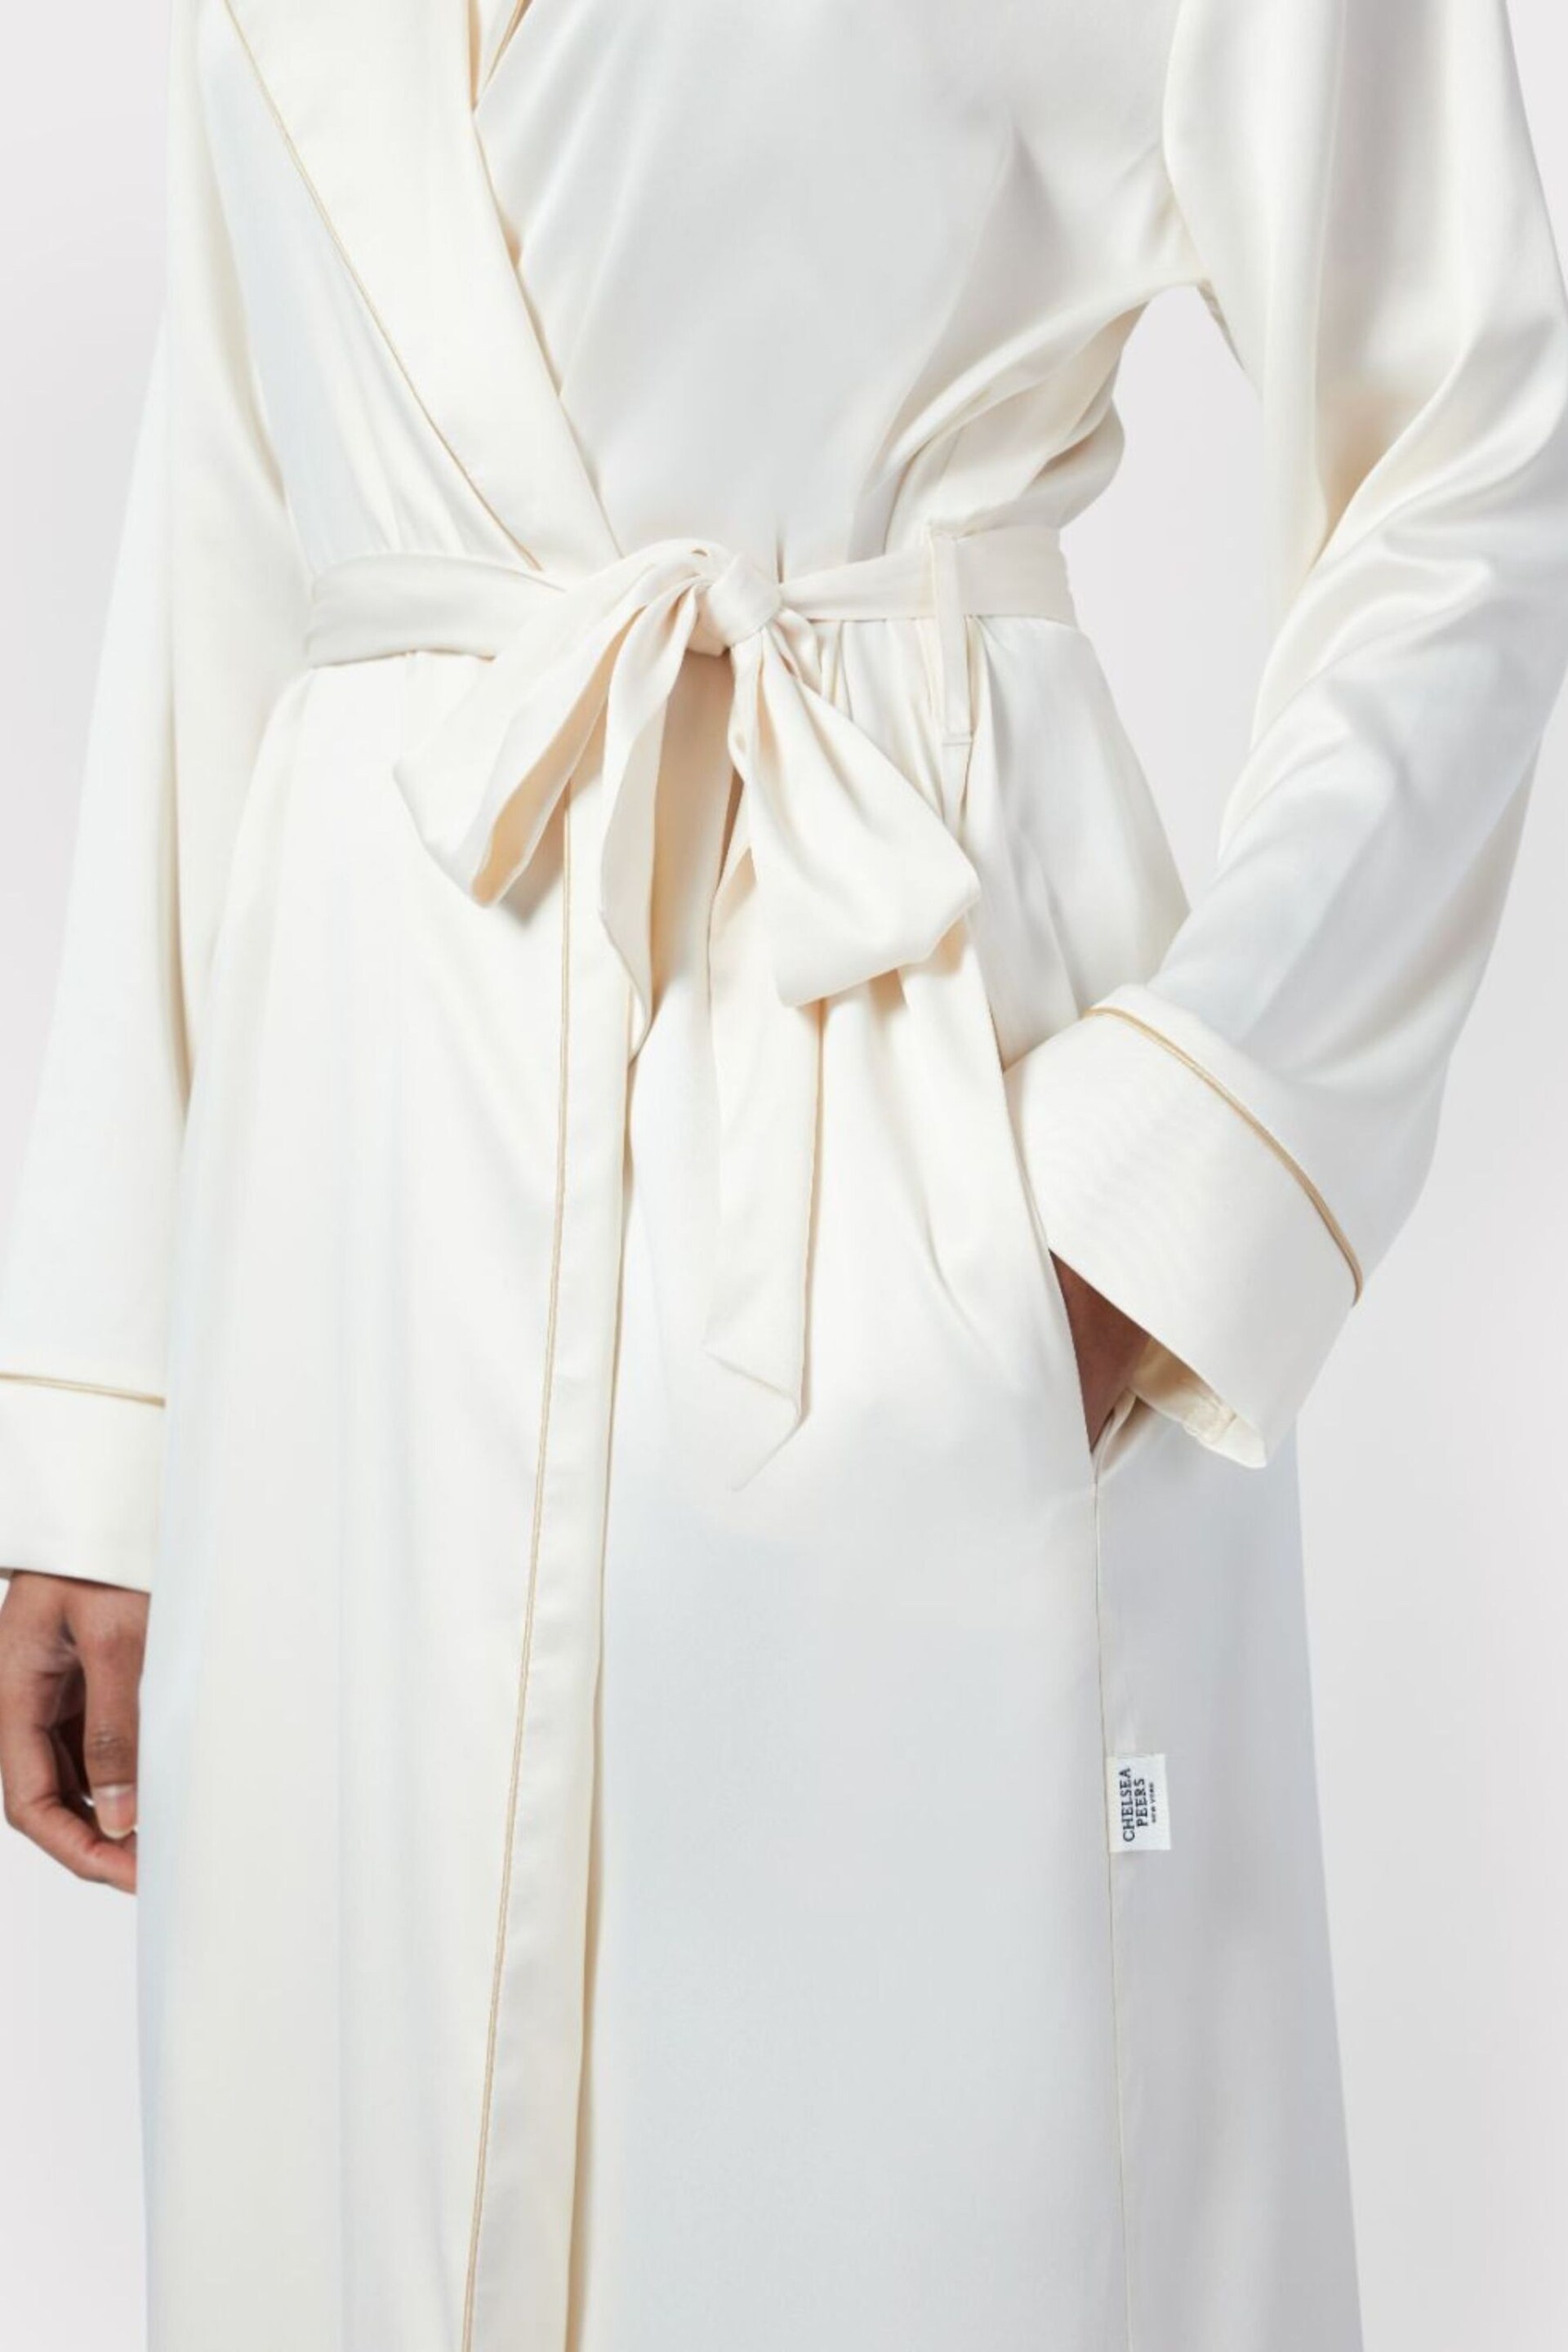 Chelsea Peers Cream Satin Fringe-Trim Dressing Gown - Image 5 of 5